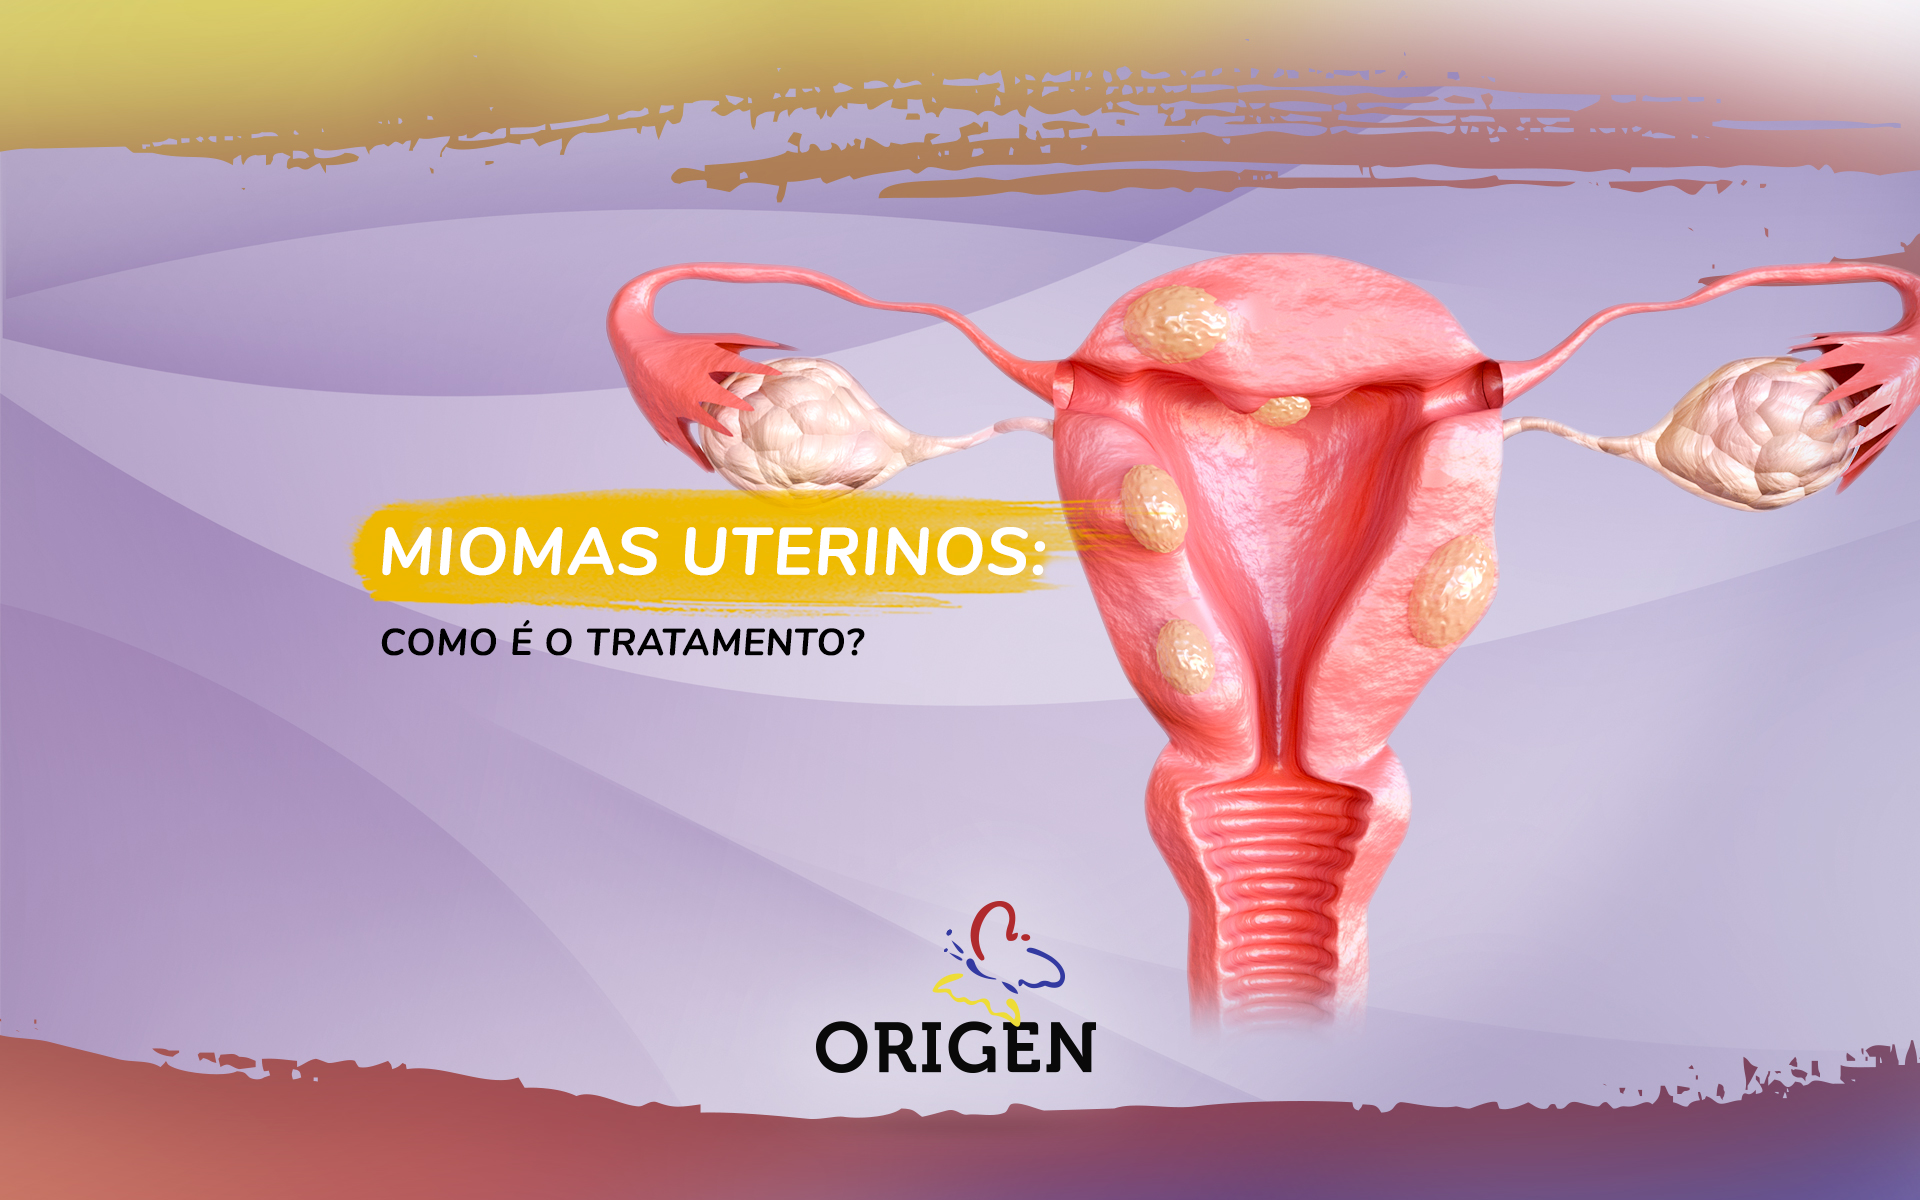 Miomas uterinos: como é o tratamento?